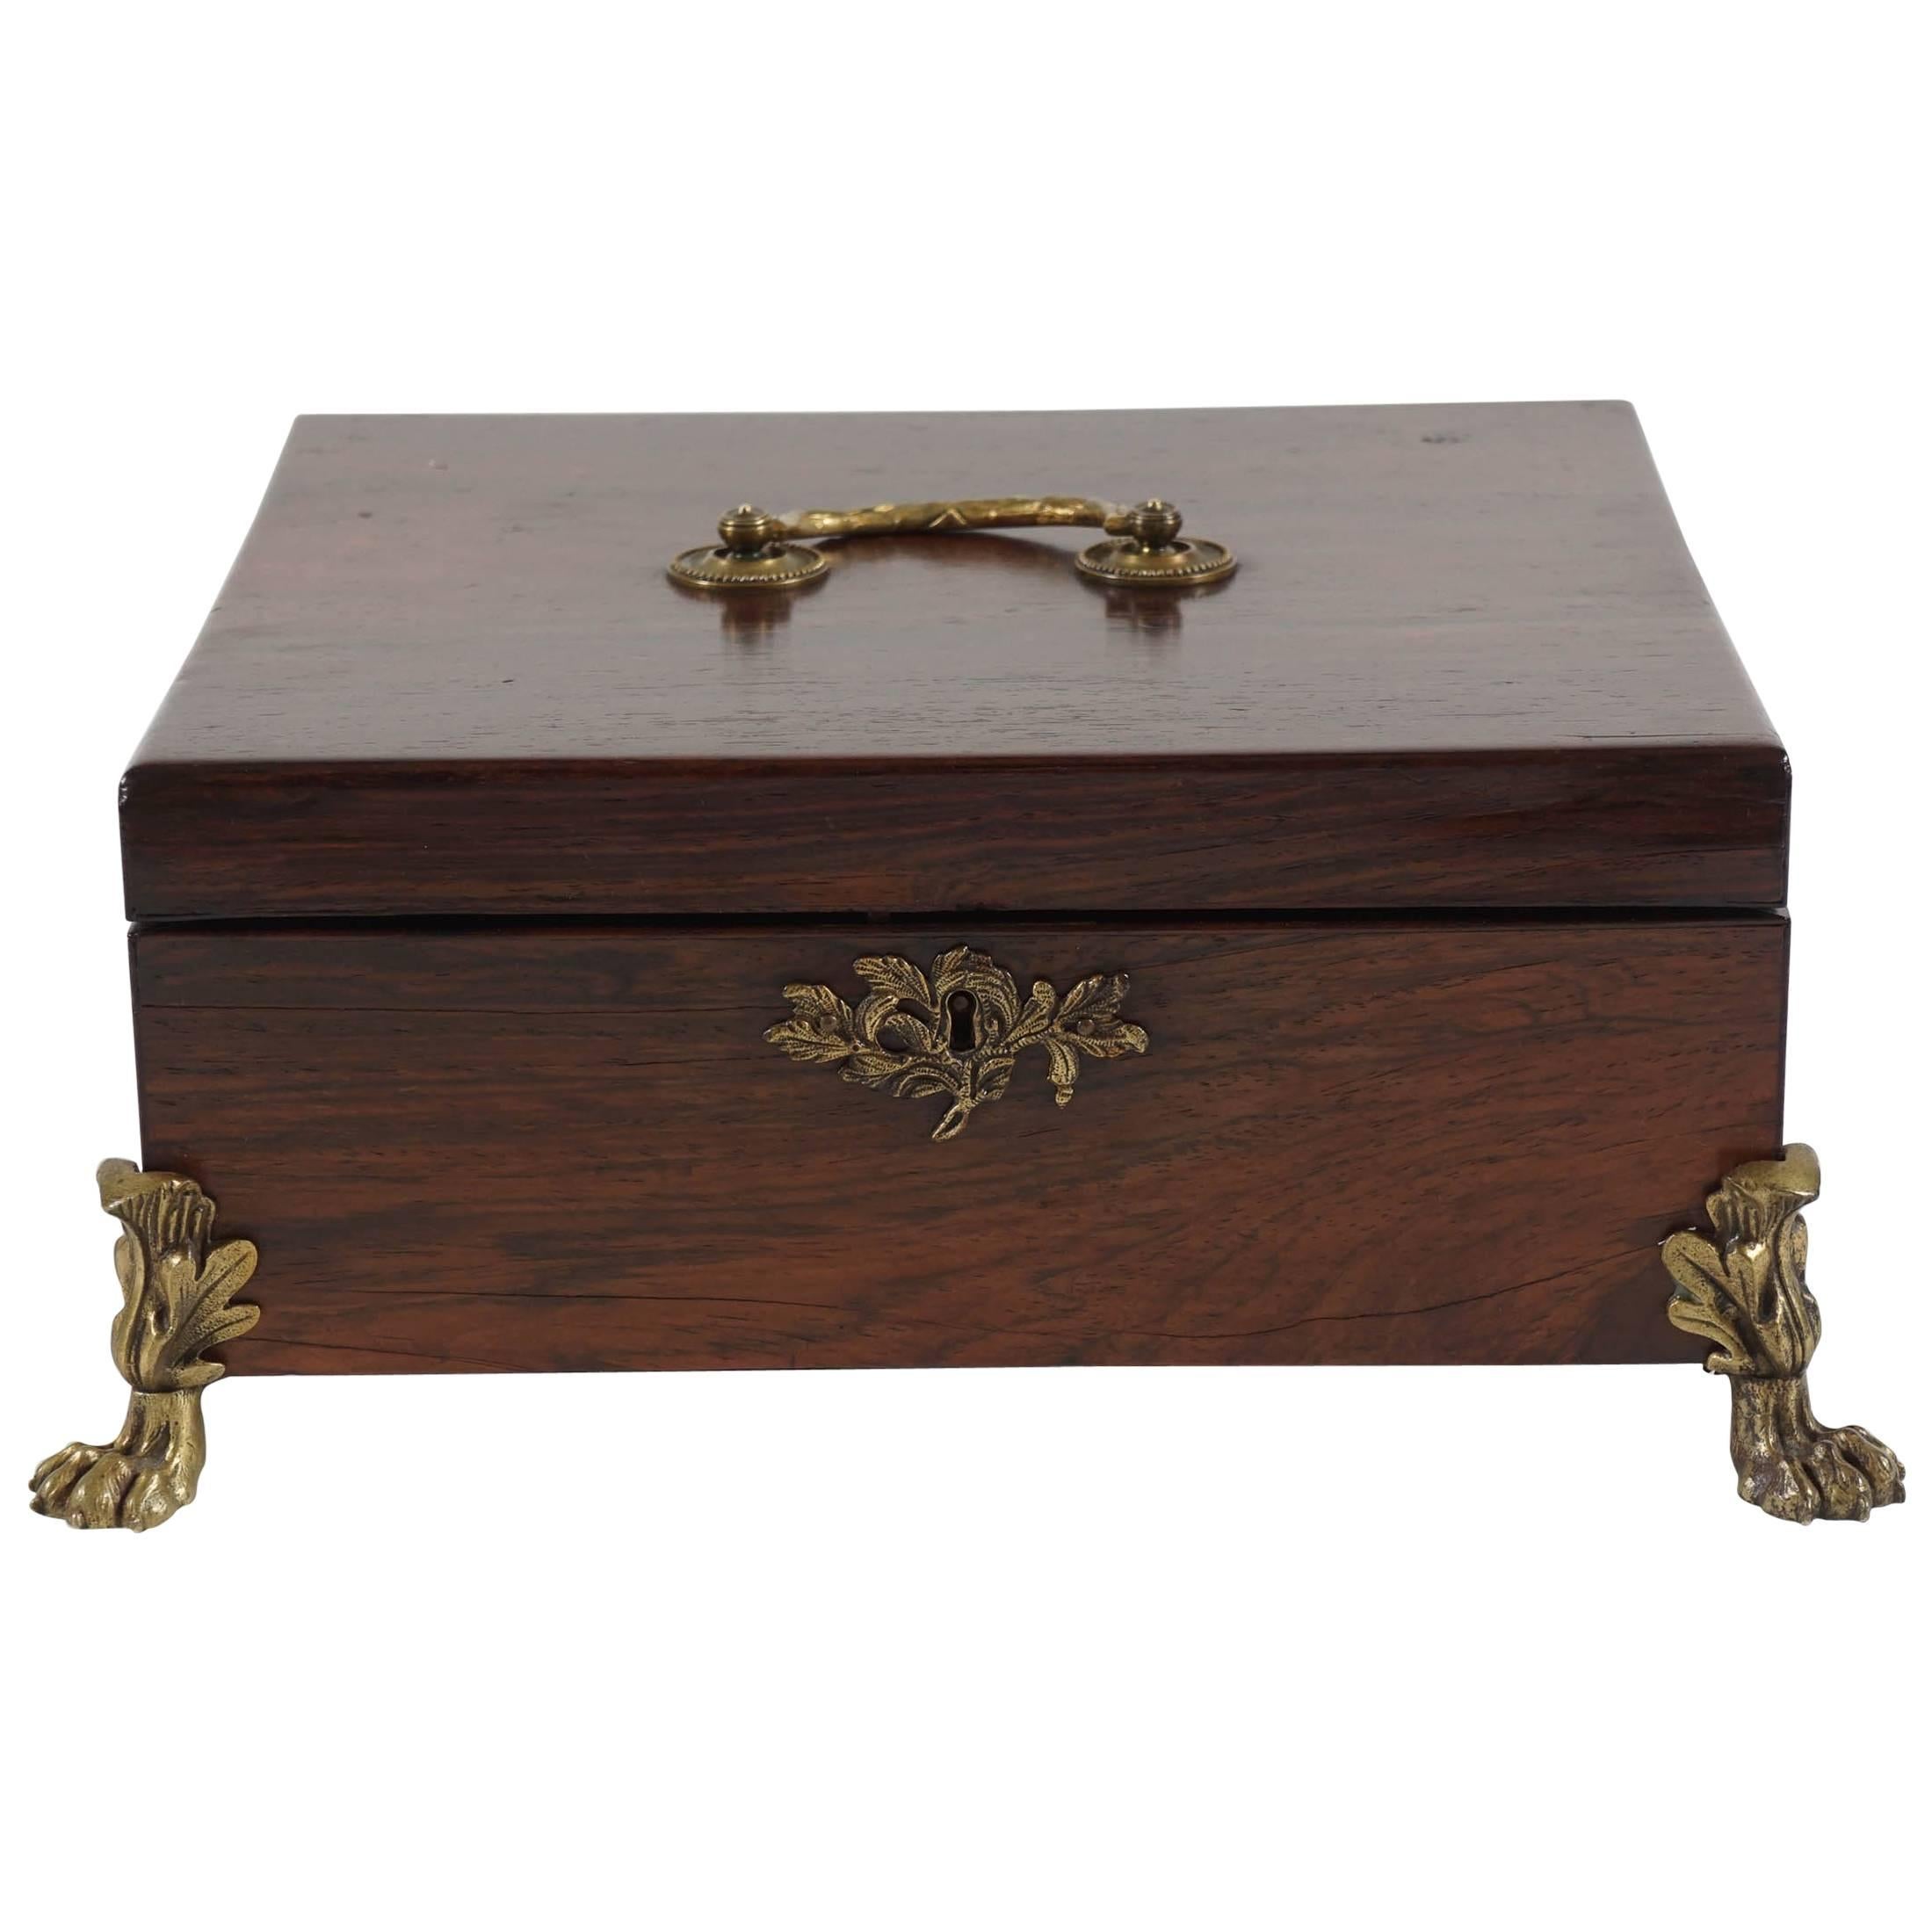 English Regency Period Rosewood Dresser or Jewelry Box, circa 1810